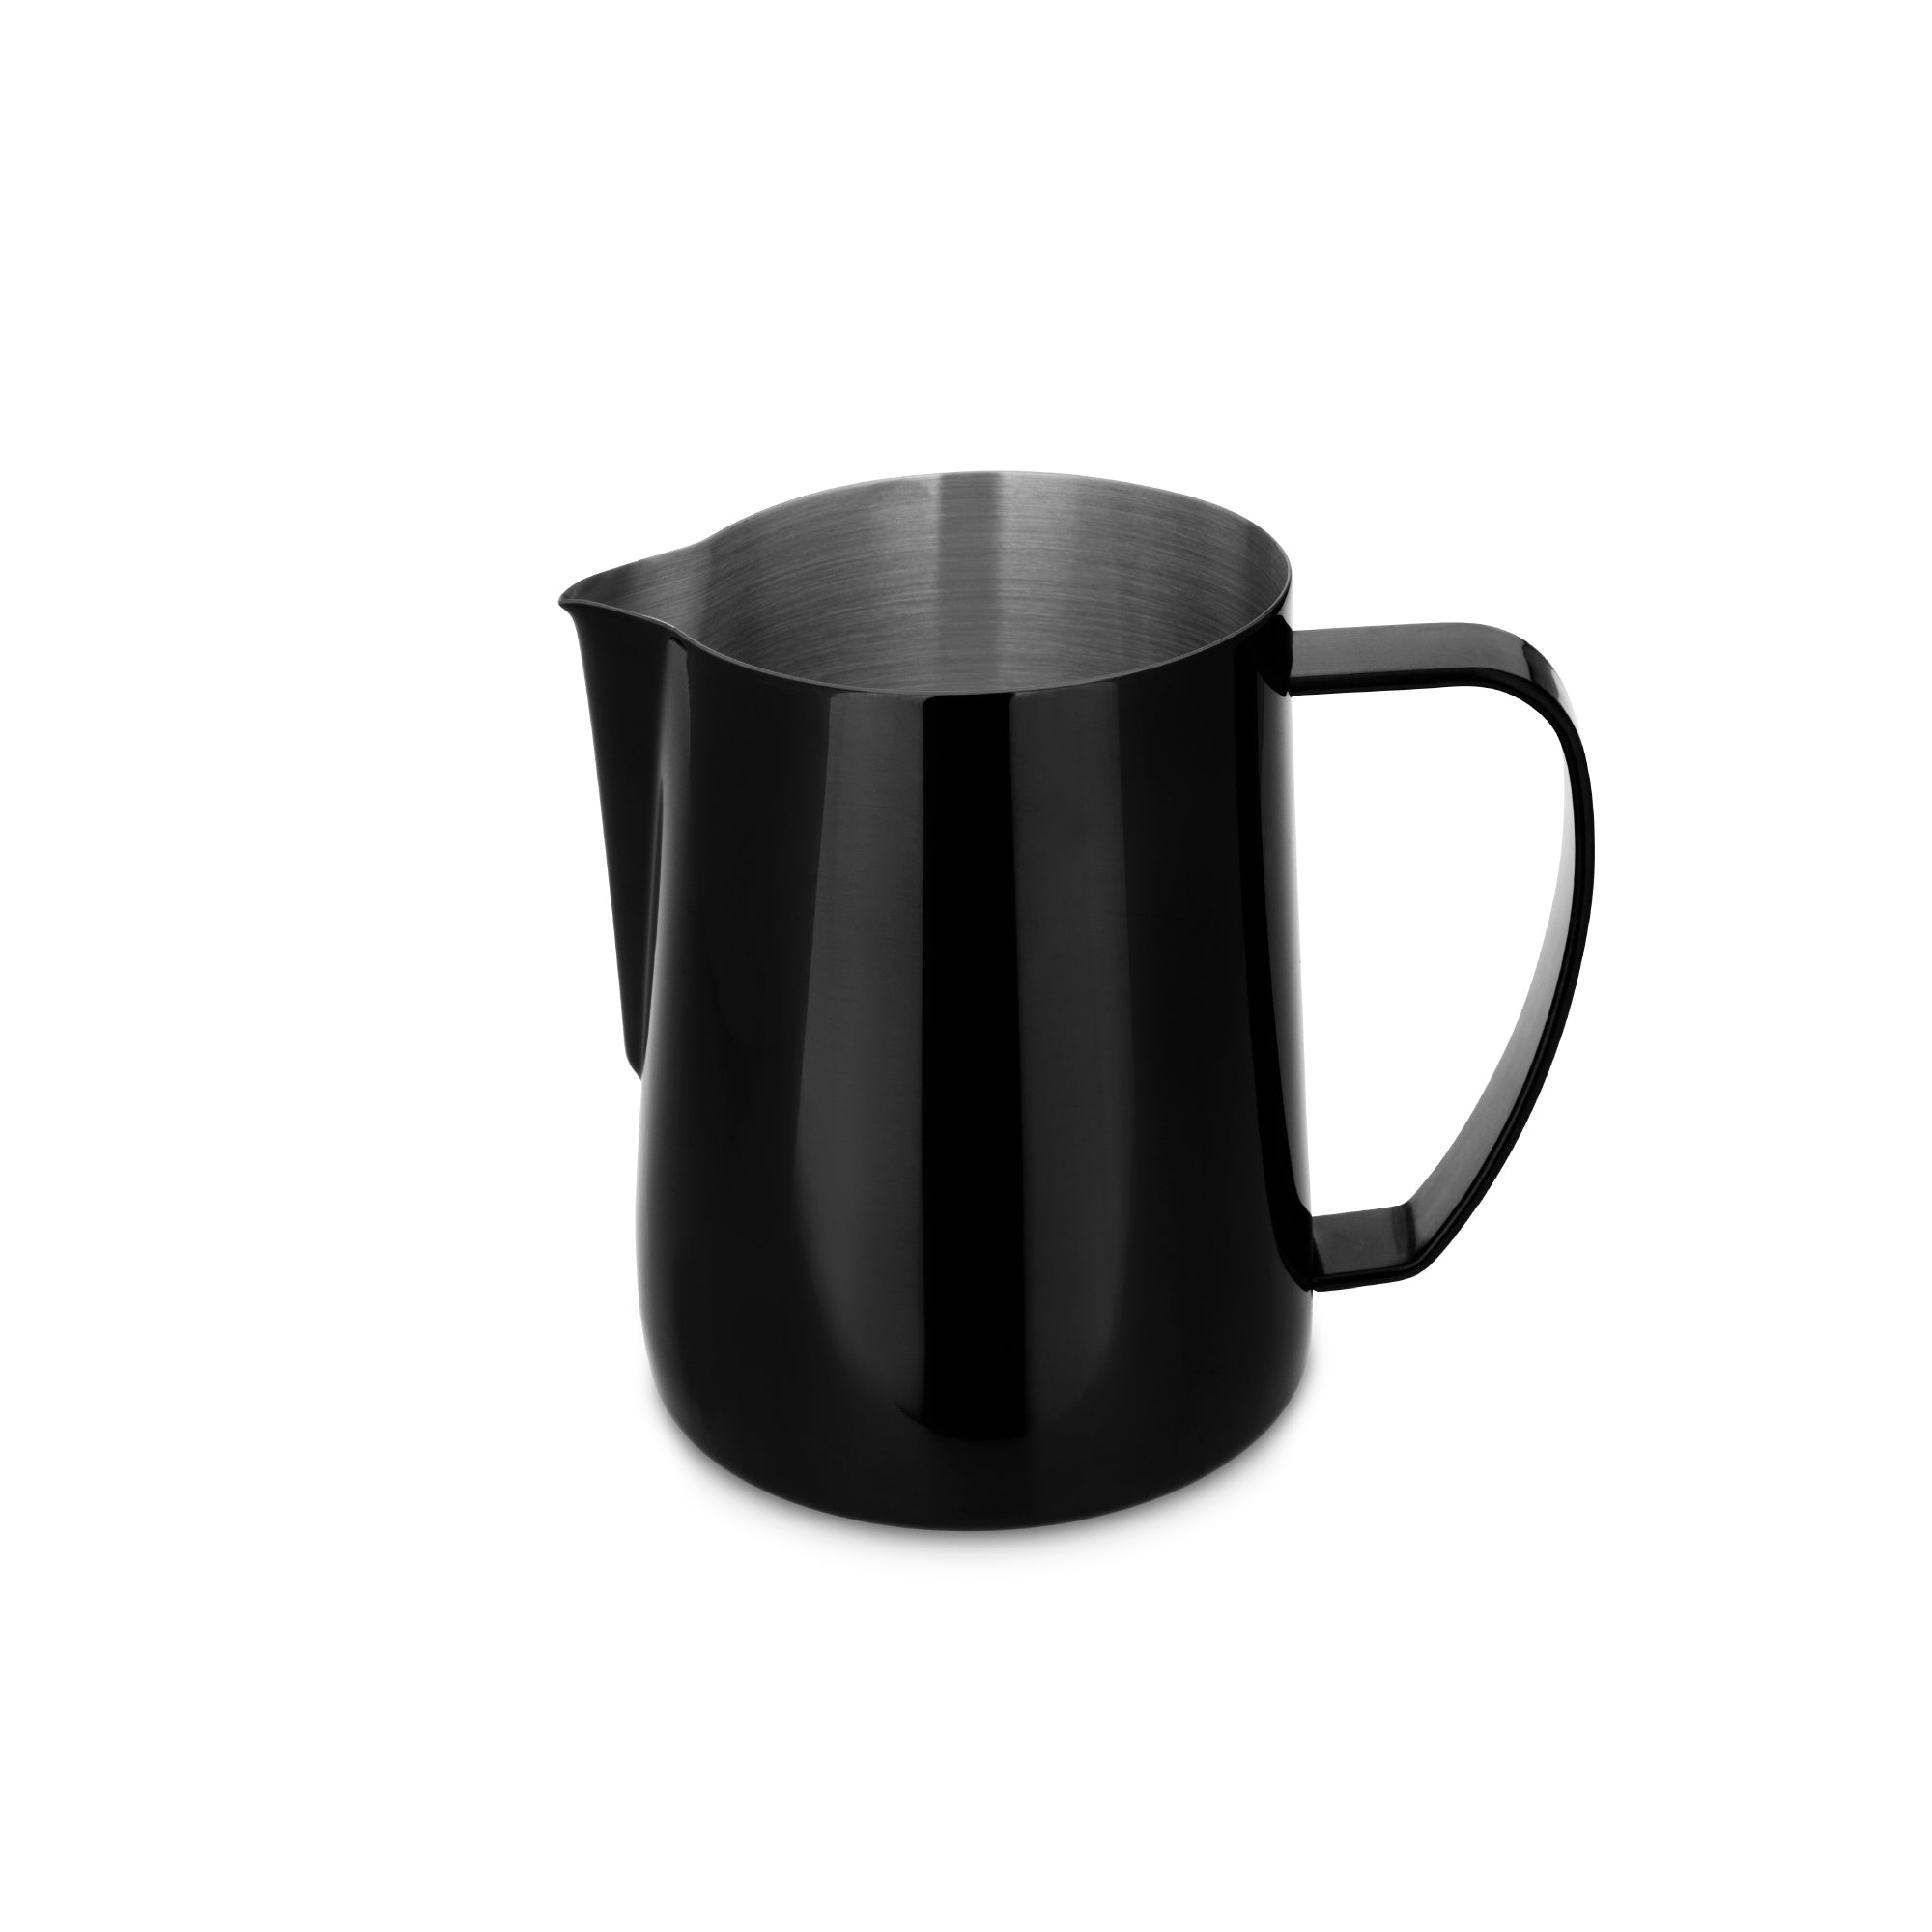 https://cdn.shopify.com/s/files/1/0293/4380/9620/products/espressoworks-milk-frothing-jug-stainless-steel-black-six-hundred-ml-01_2000x.jpg?v=1604995291